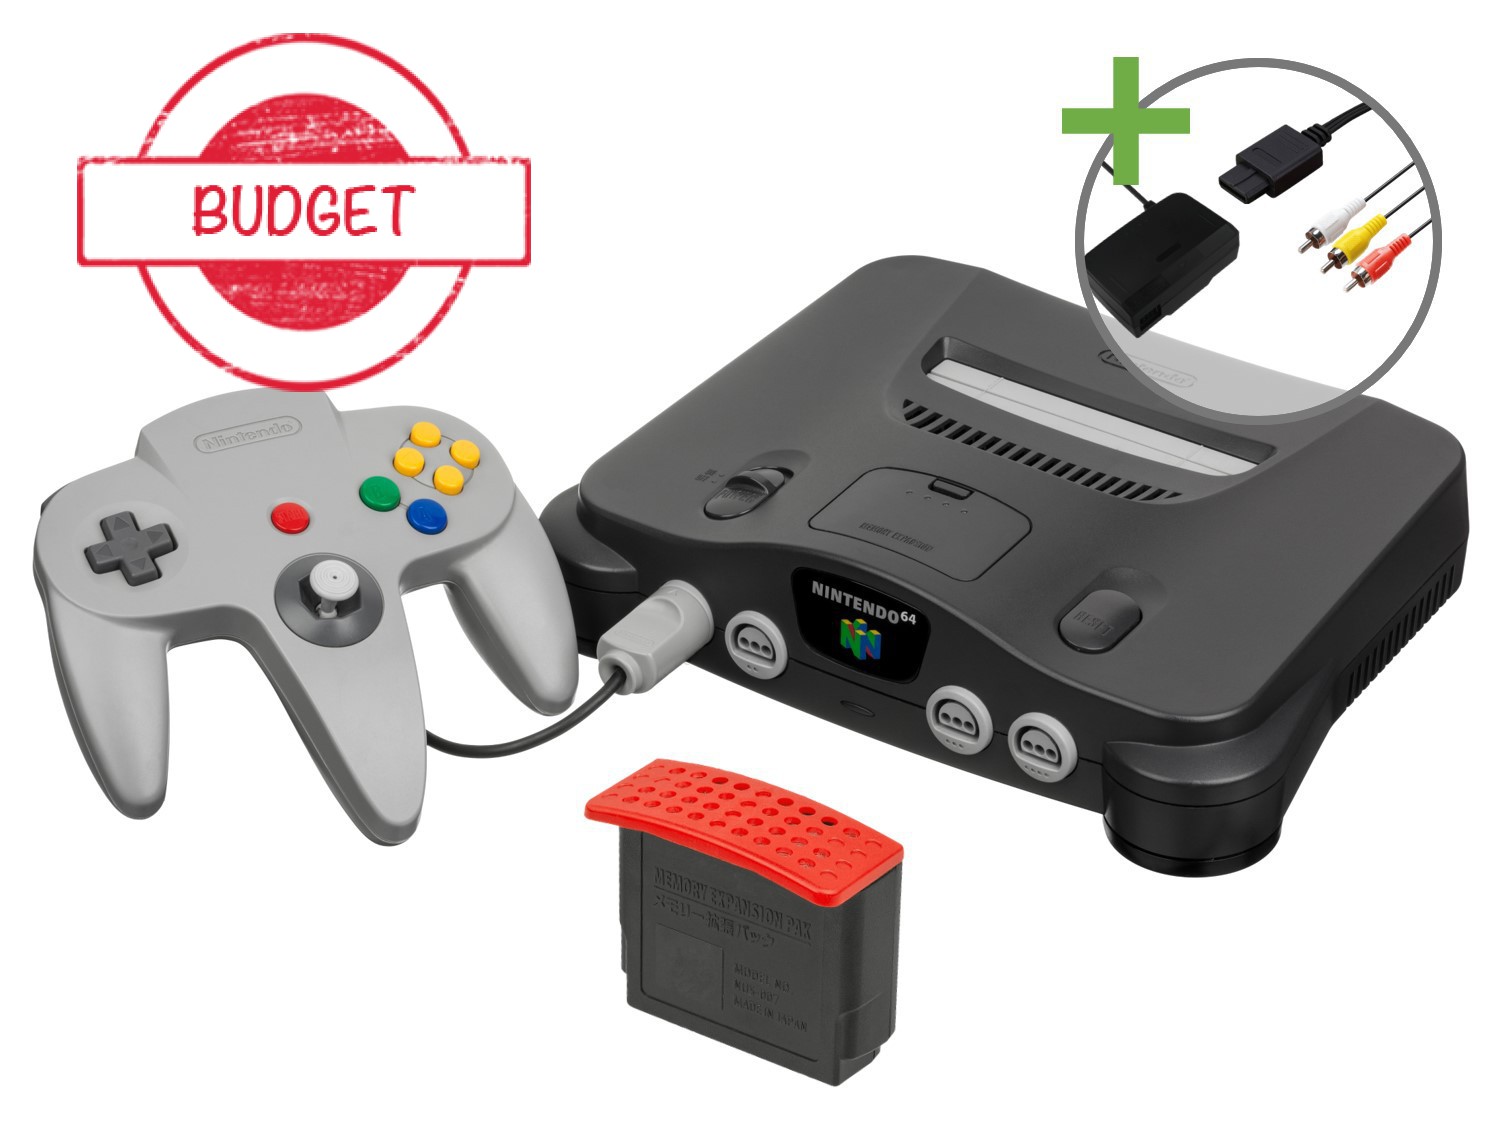 Nintendo 64 Starter Pack - Tim's Jungle Pack - Budget - Nintendo 64 Hardware - 2